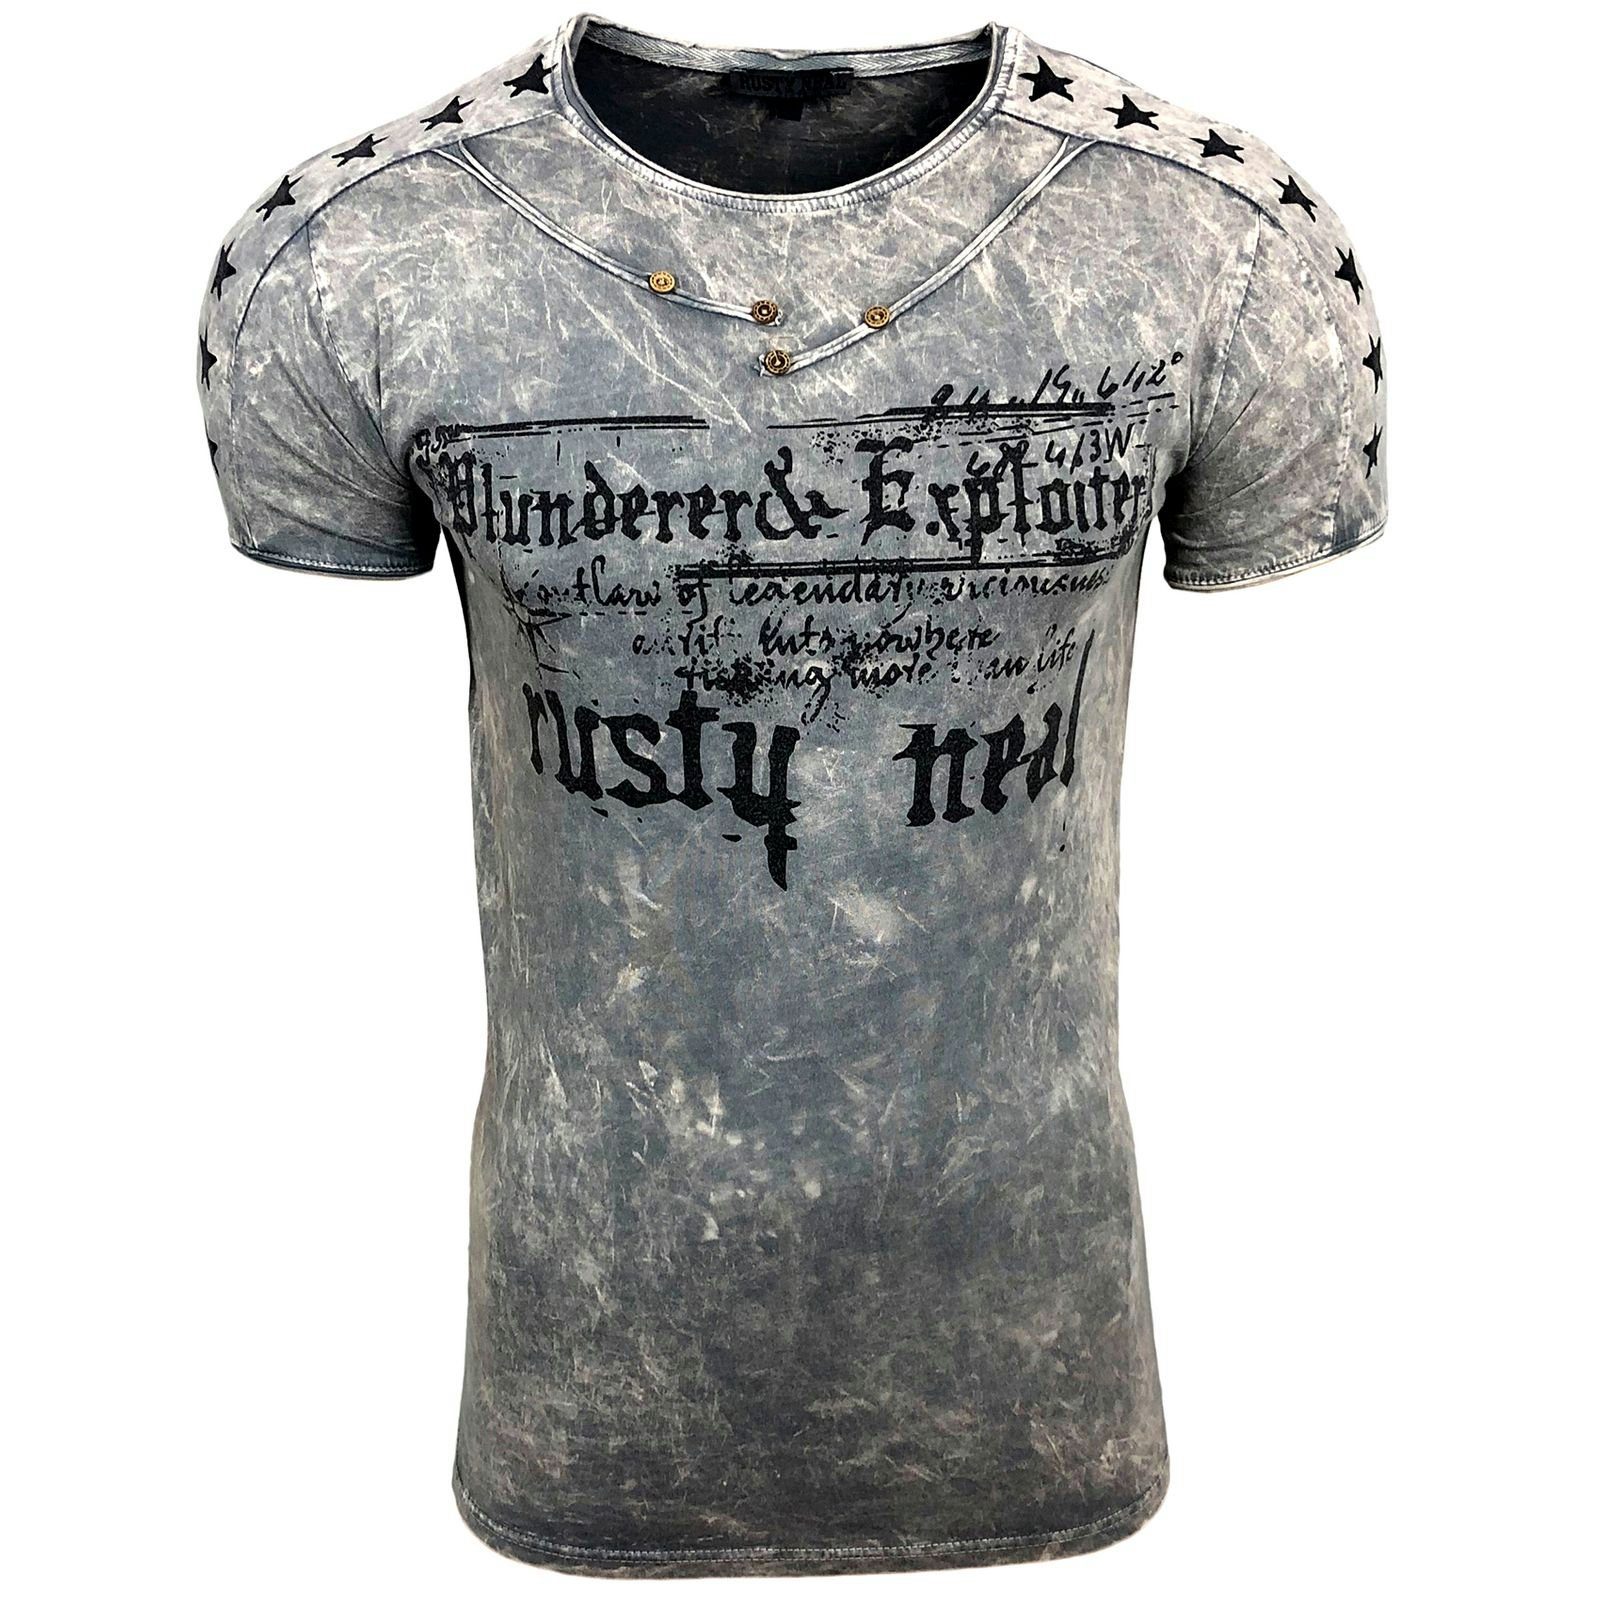 Rusty Neal T-Shirt in melierter Optik, Mit klassischem Rundhalsausschnitt  versehen